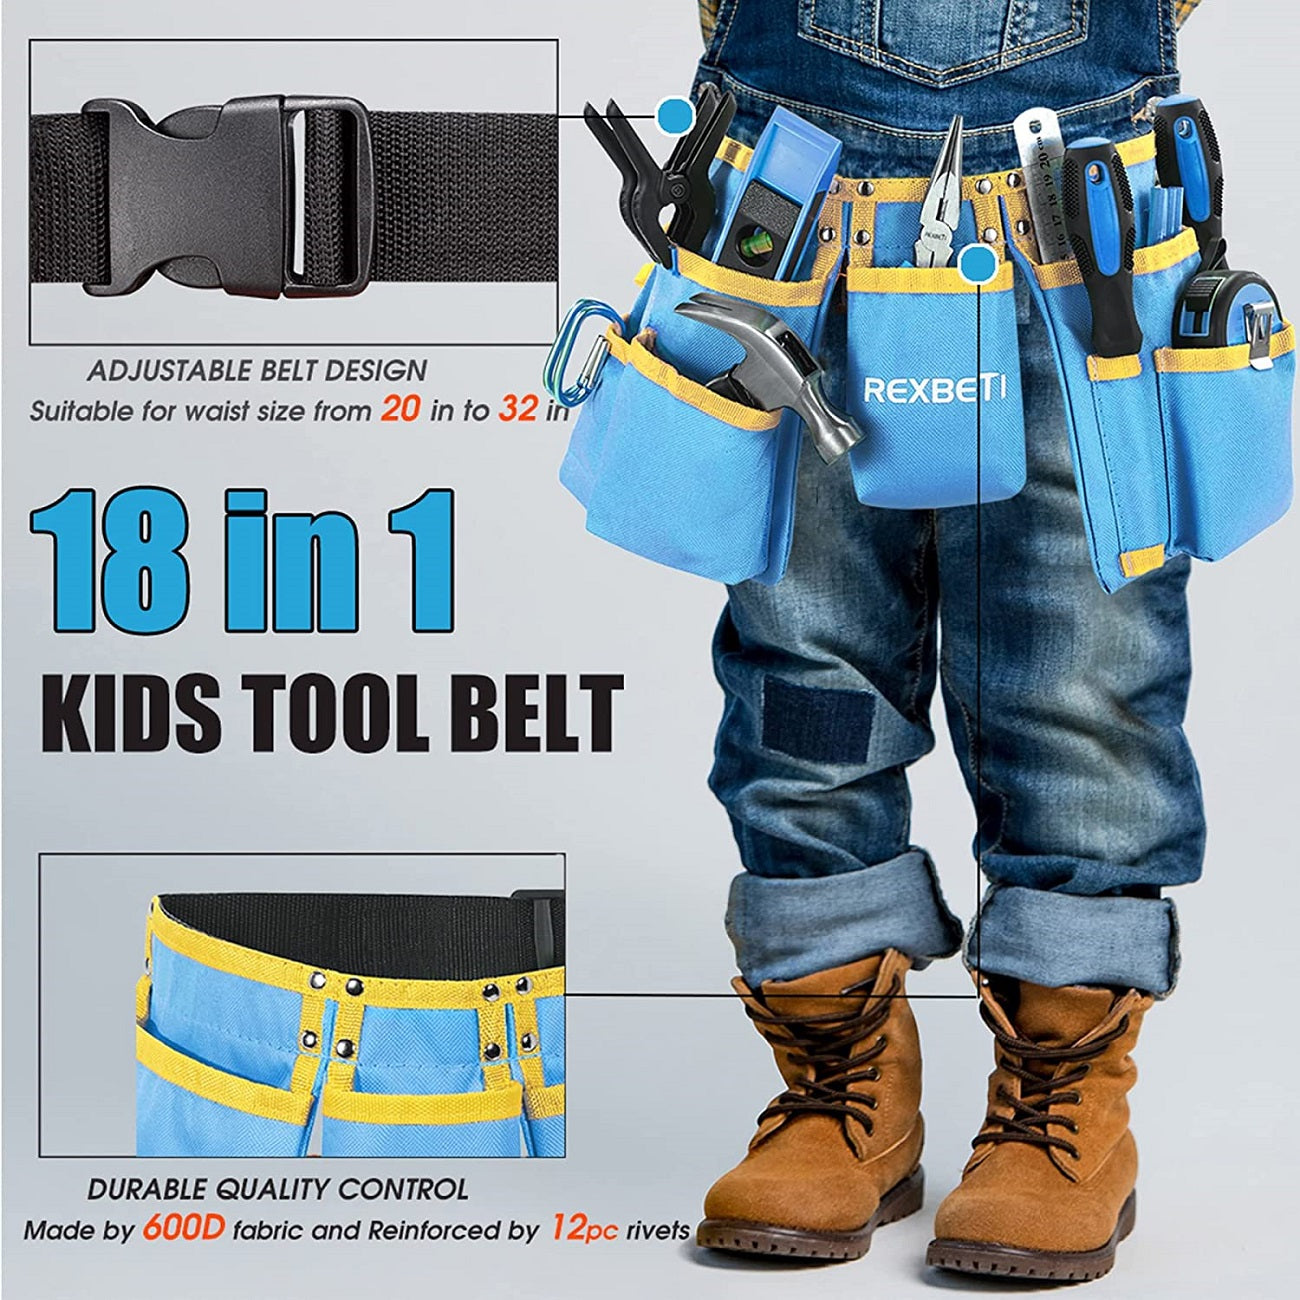 Kids tool set